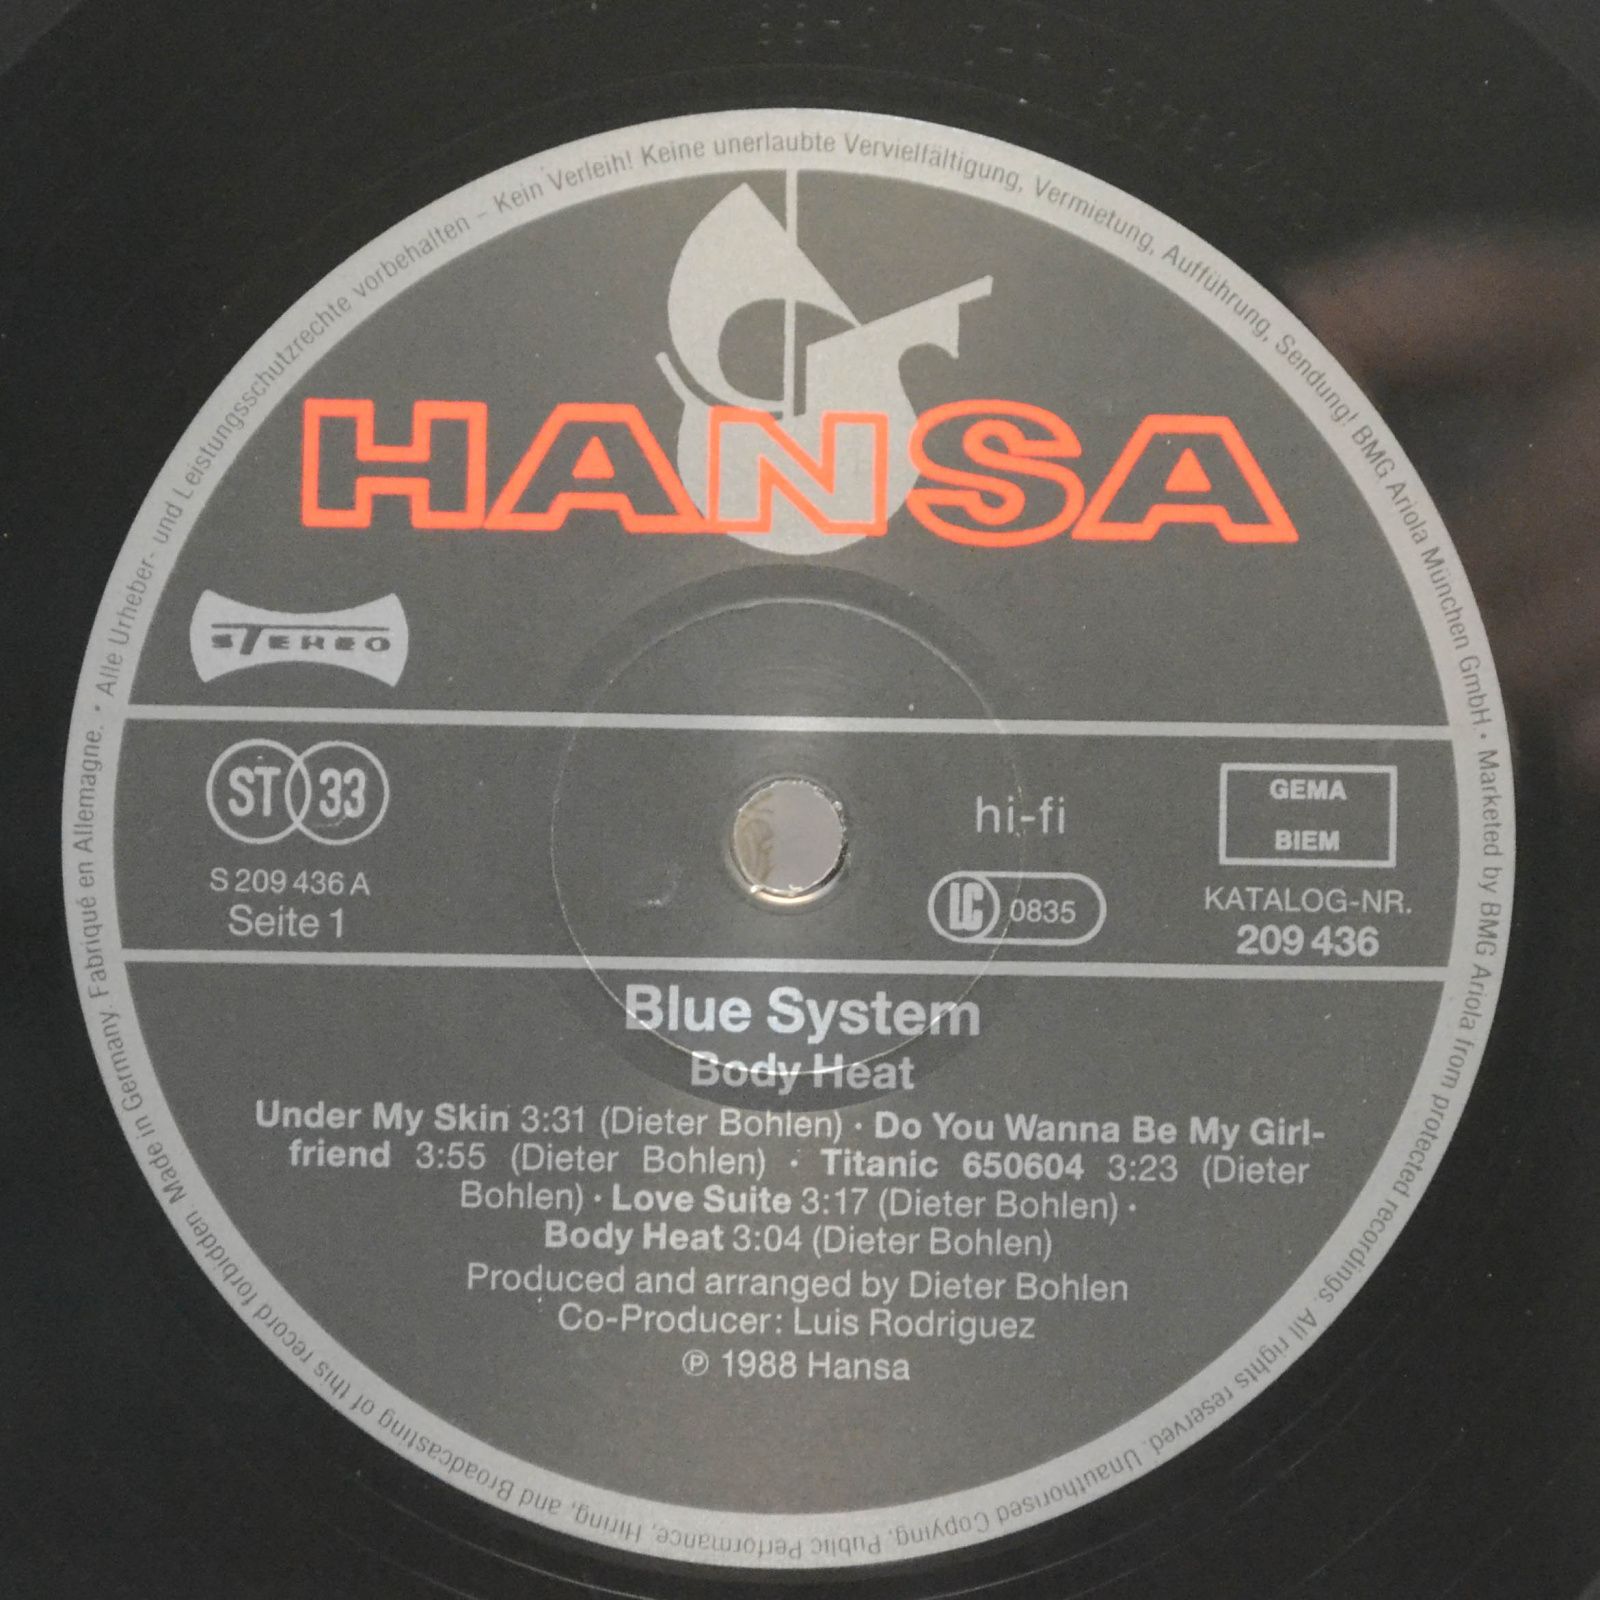 Blue System — Body Heat, 1988